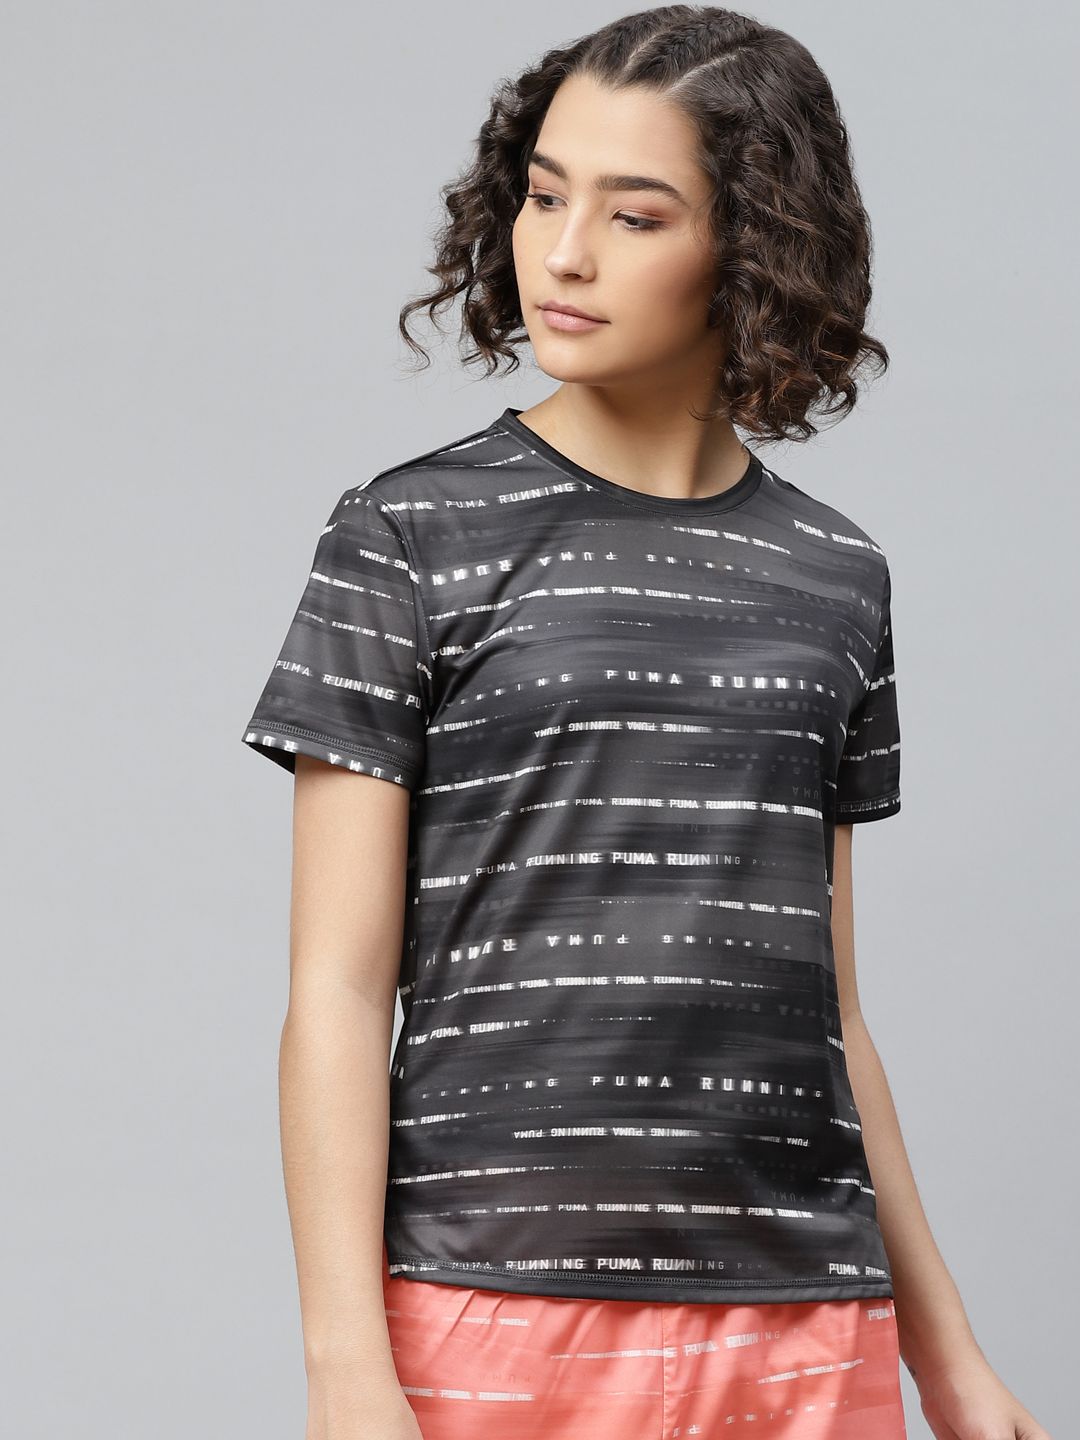 Puma Women Black & Grey Graphic Printed Round Neck Running T-shirt Price in India